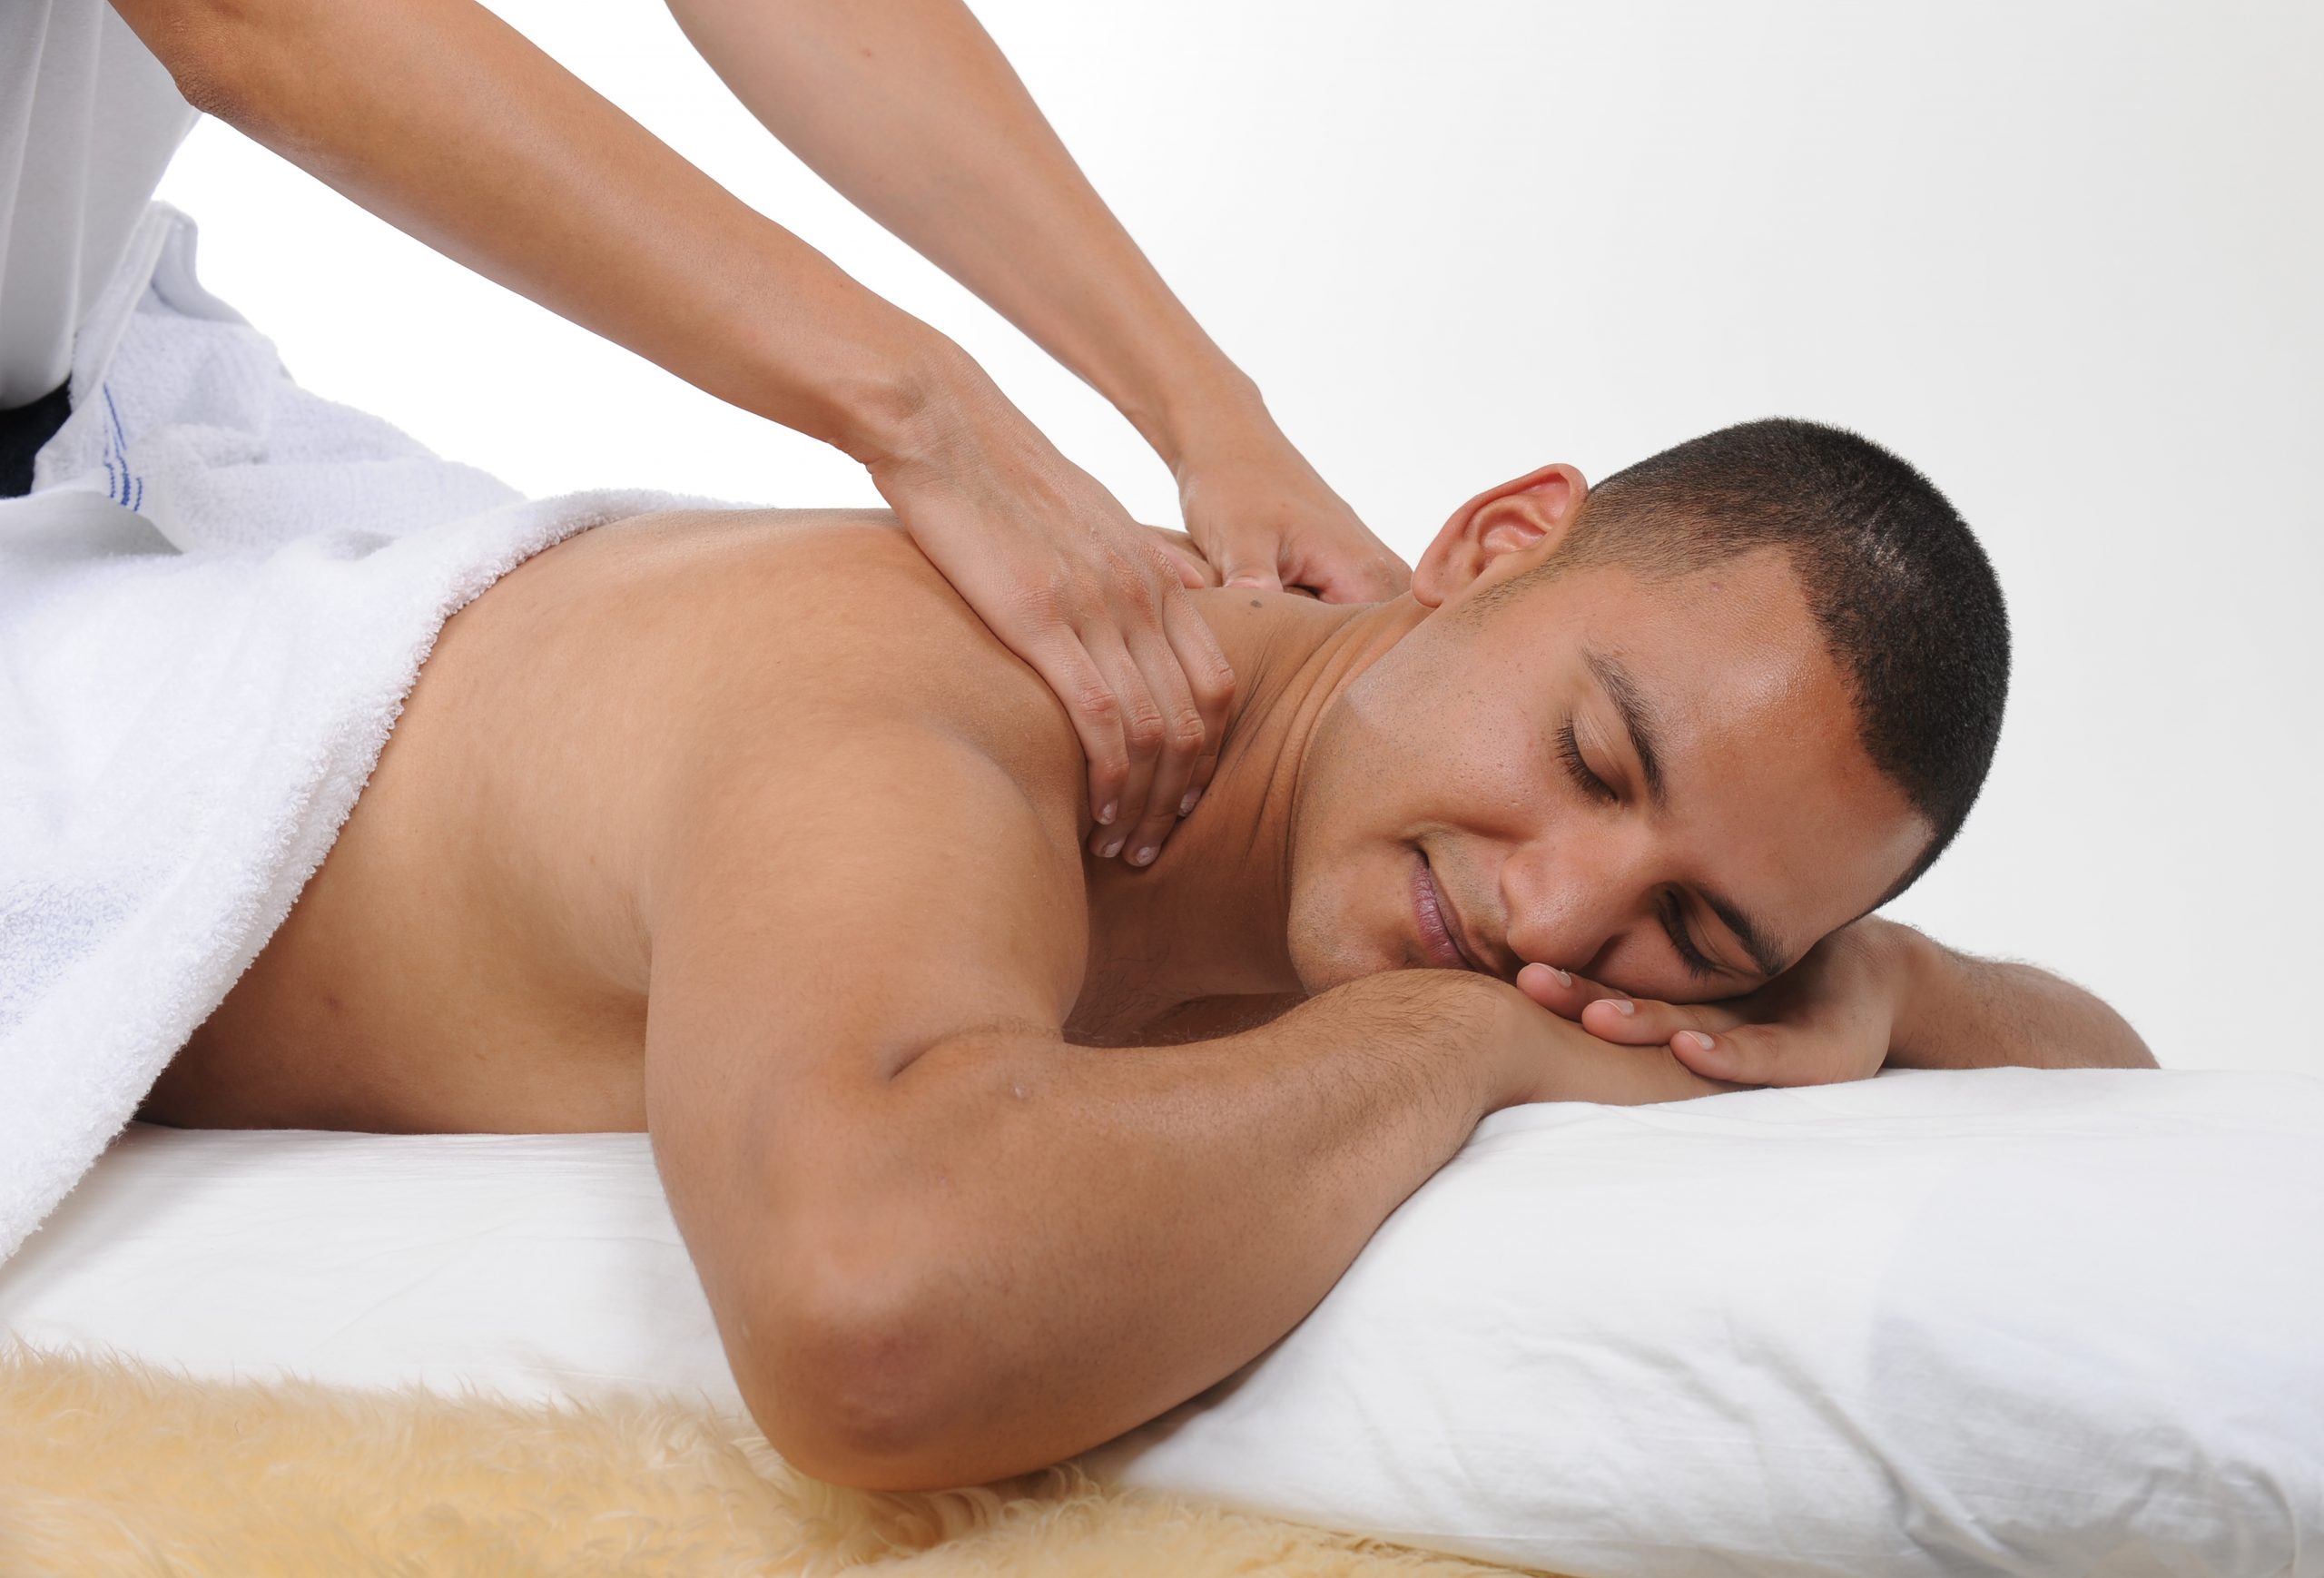 George massage. Спортивный массаж. Массаж мужчине. Массаж спины мужчине. Массаж спортивный для мужчин.